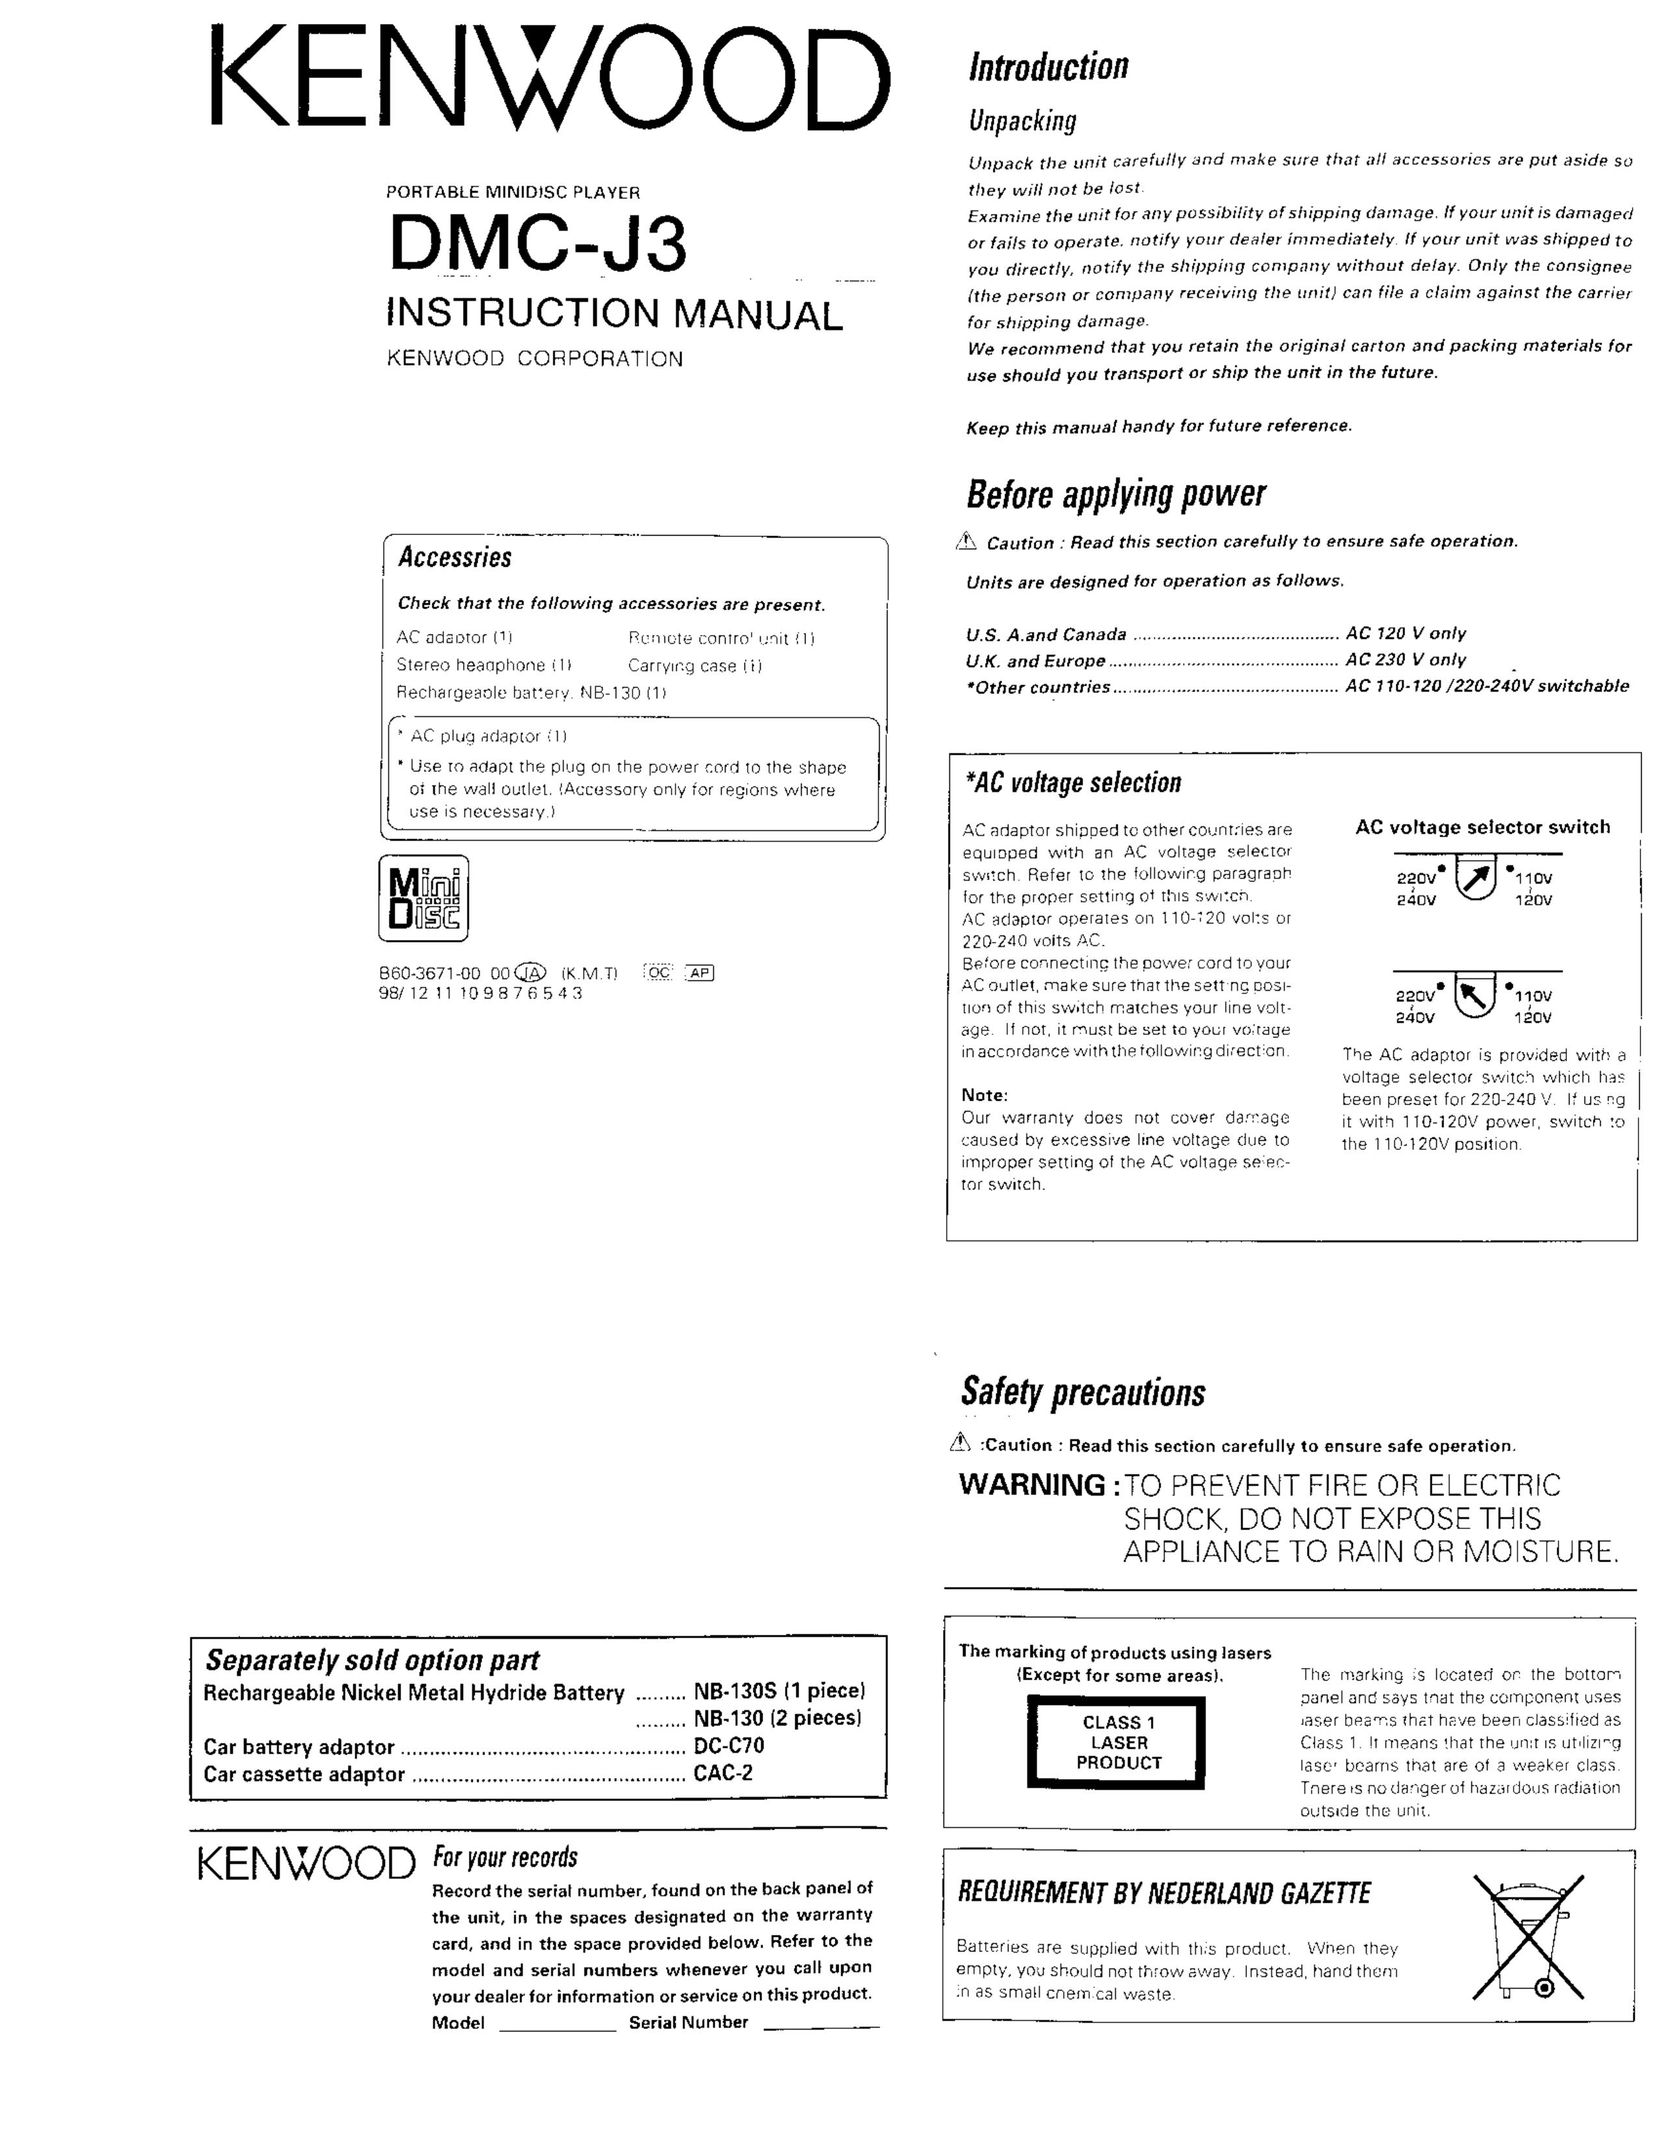 Kenwood DMC-J3 Blu-ray Player User Manual